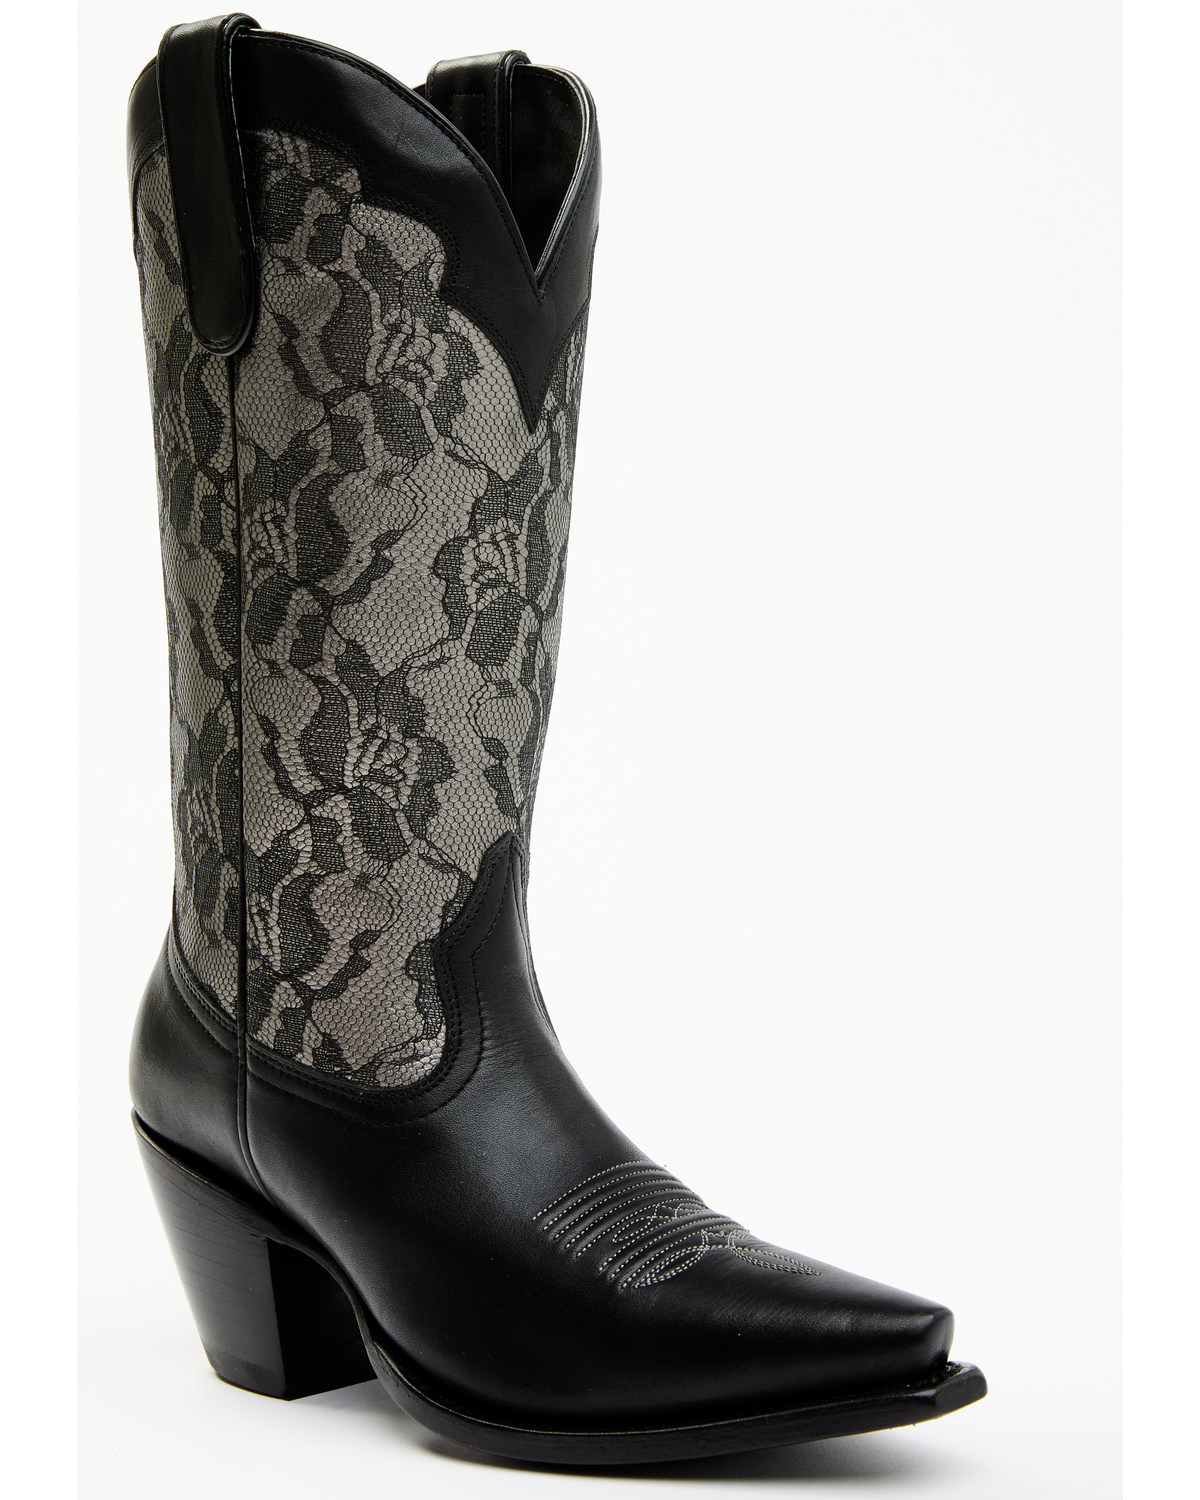 Shyanne Women's Blaire Western Boots - Snip Toe